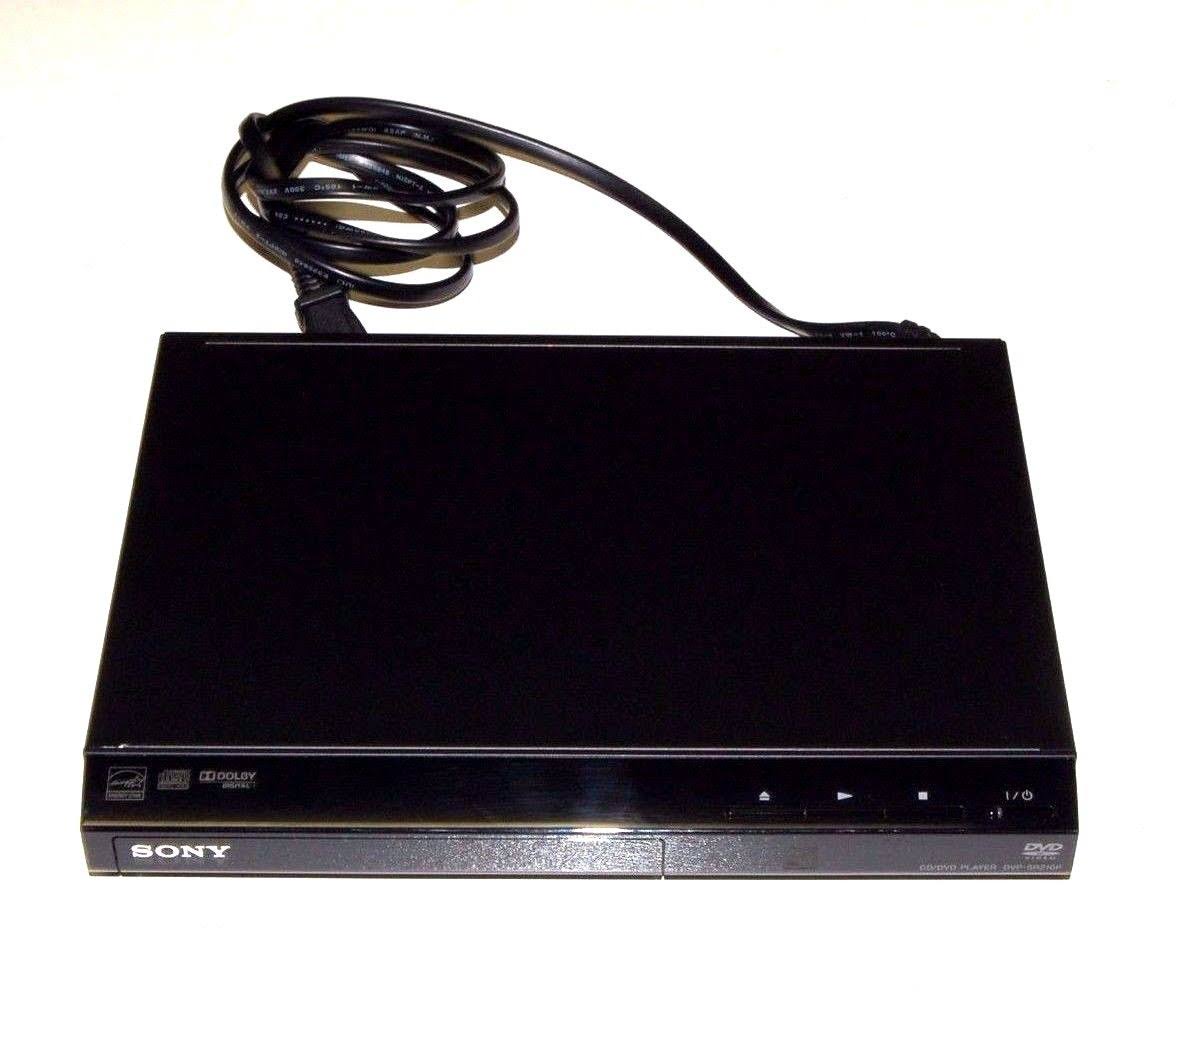 Sony DVPSR210PDVDPlayer(ProgressiveScan)withMiniToolBox...